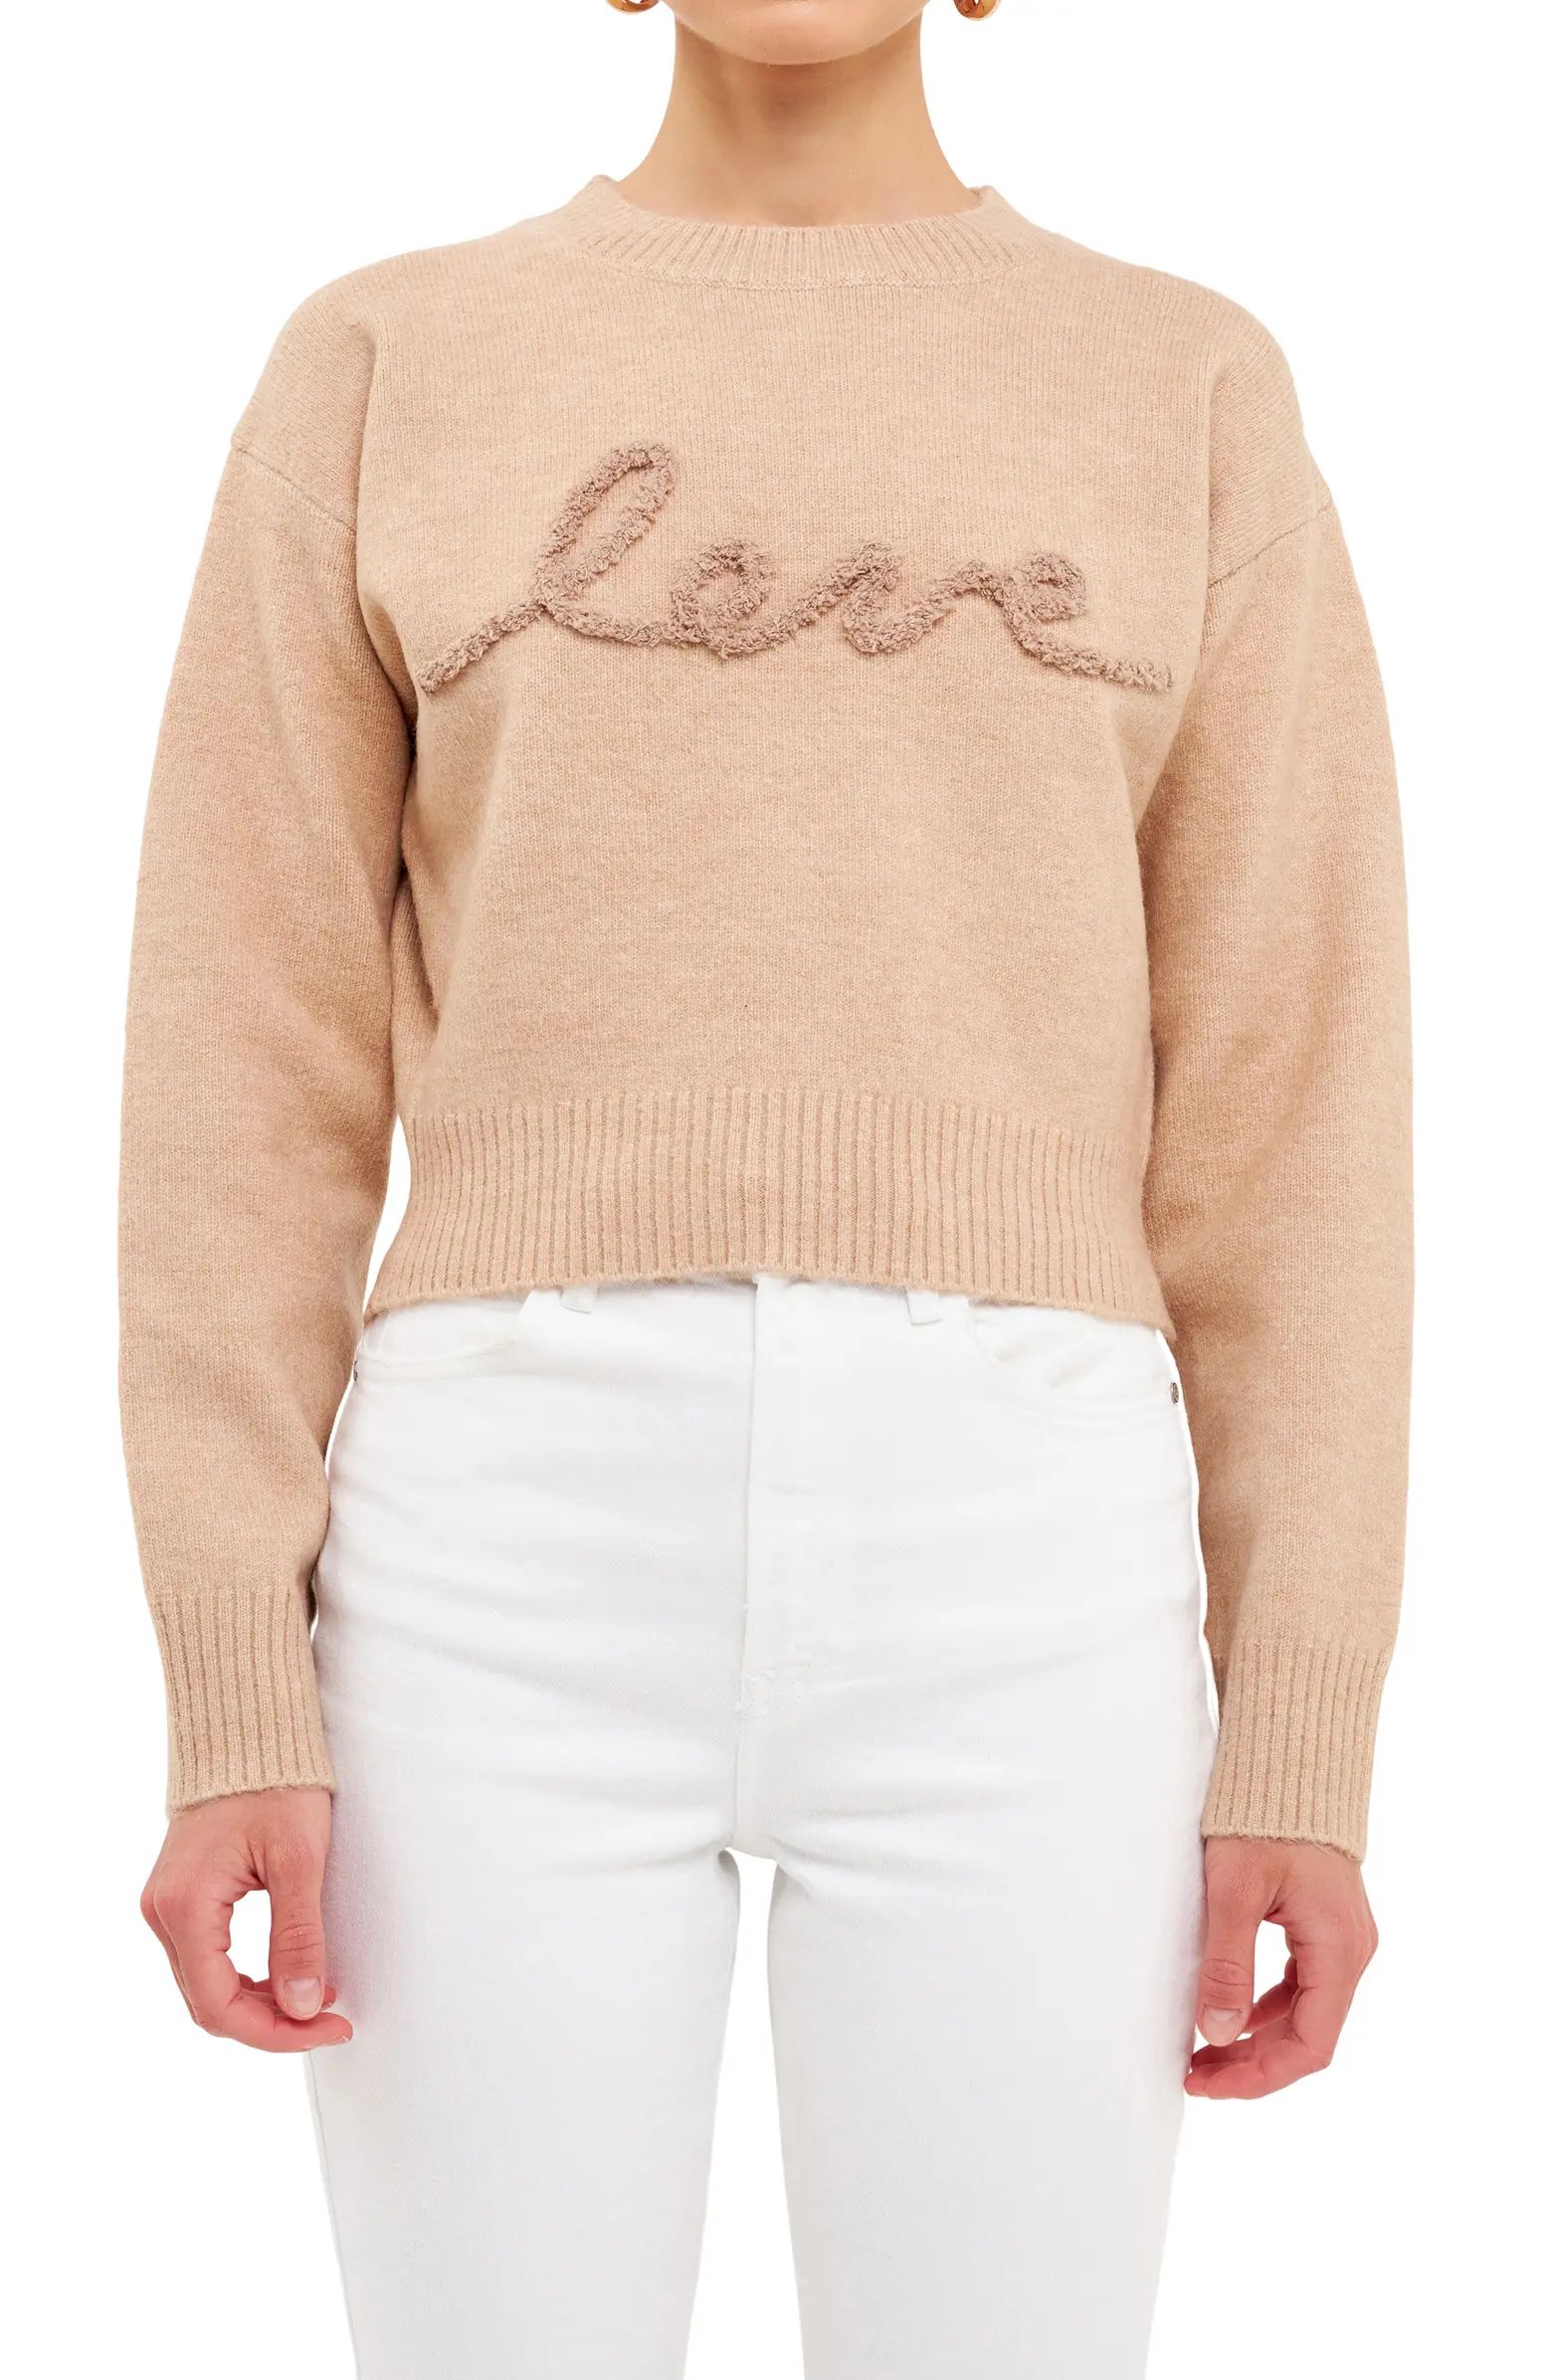 Love Chenille Sweater | Nordstrom